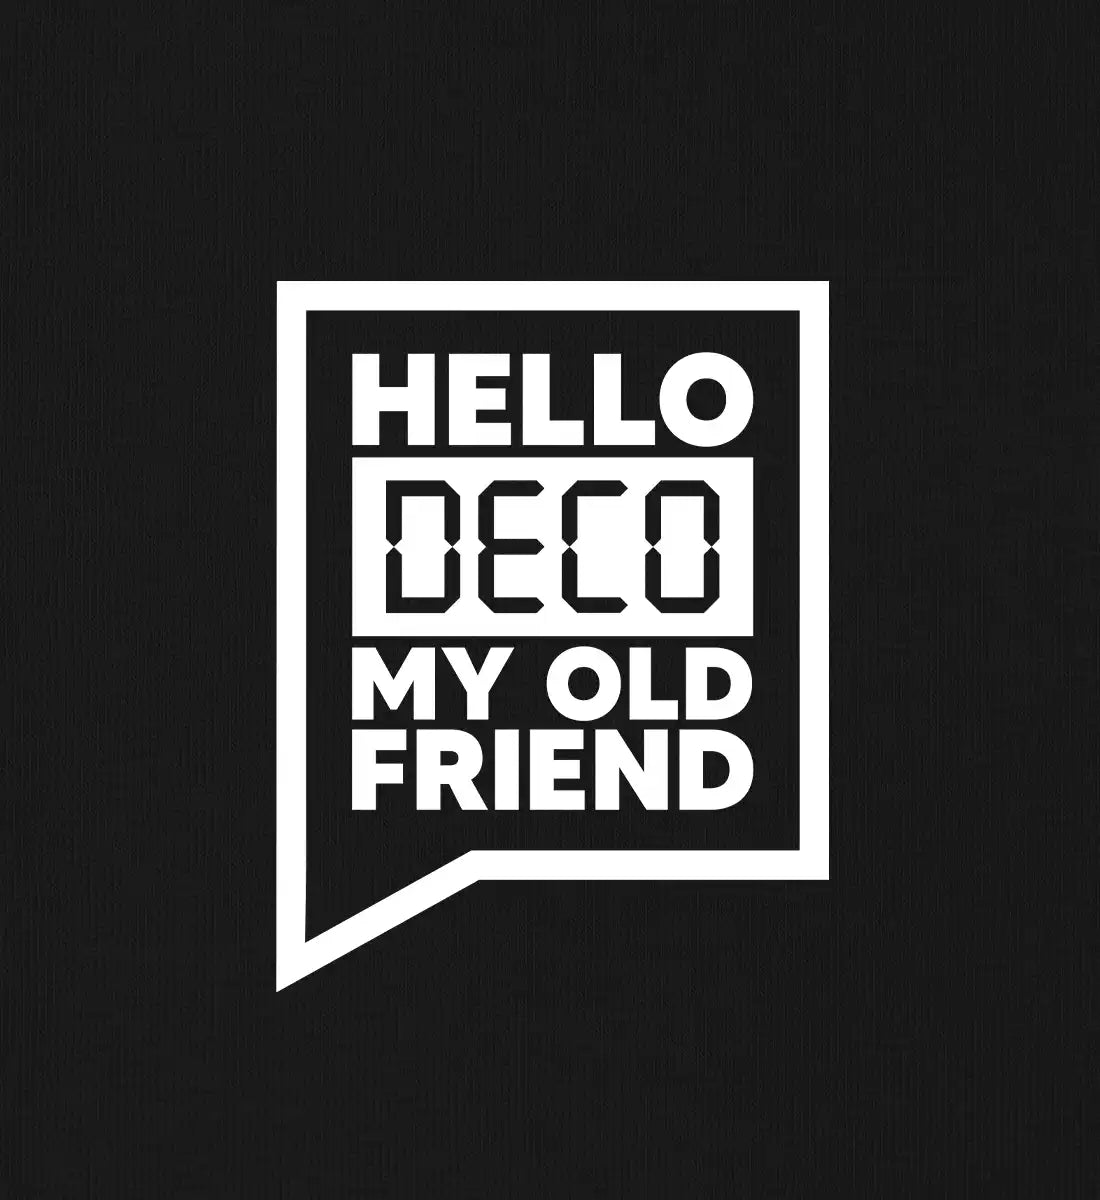 Hello Deco - 100 % Bio Frauen T-Shirt